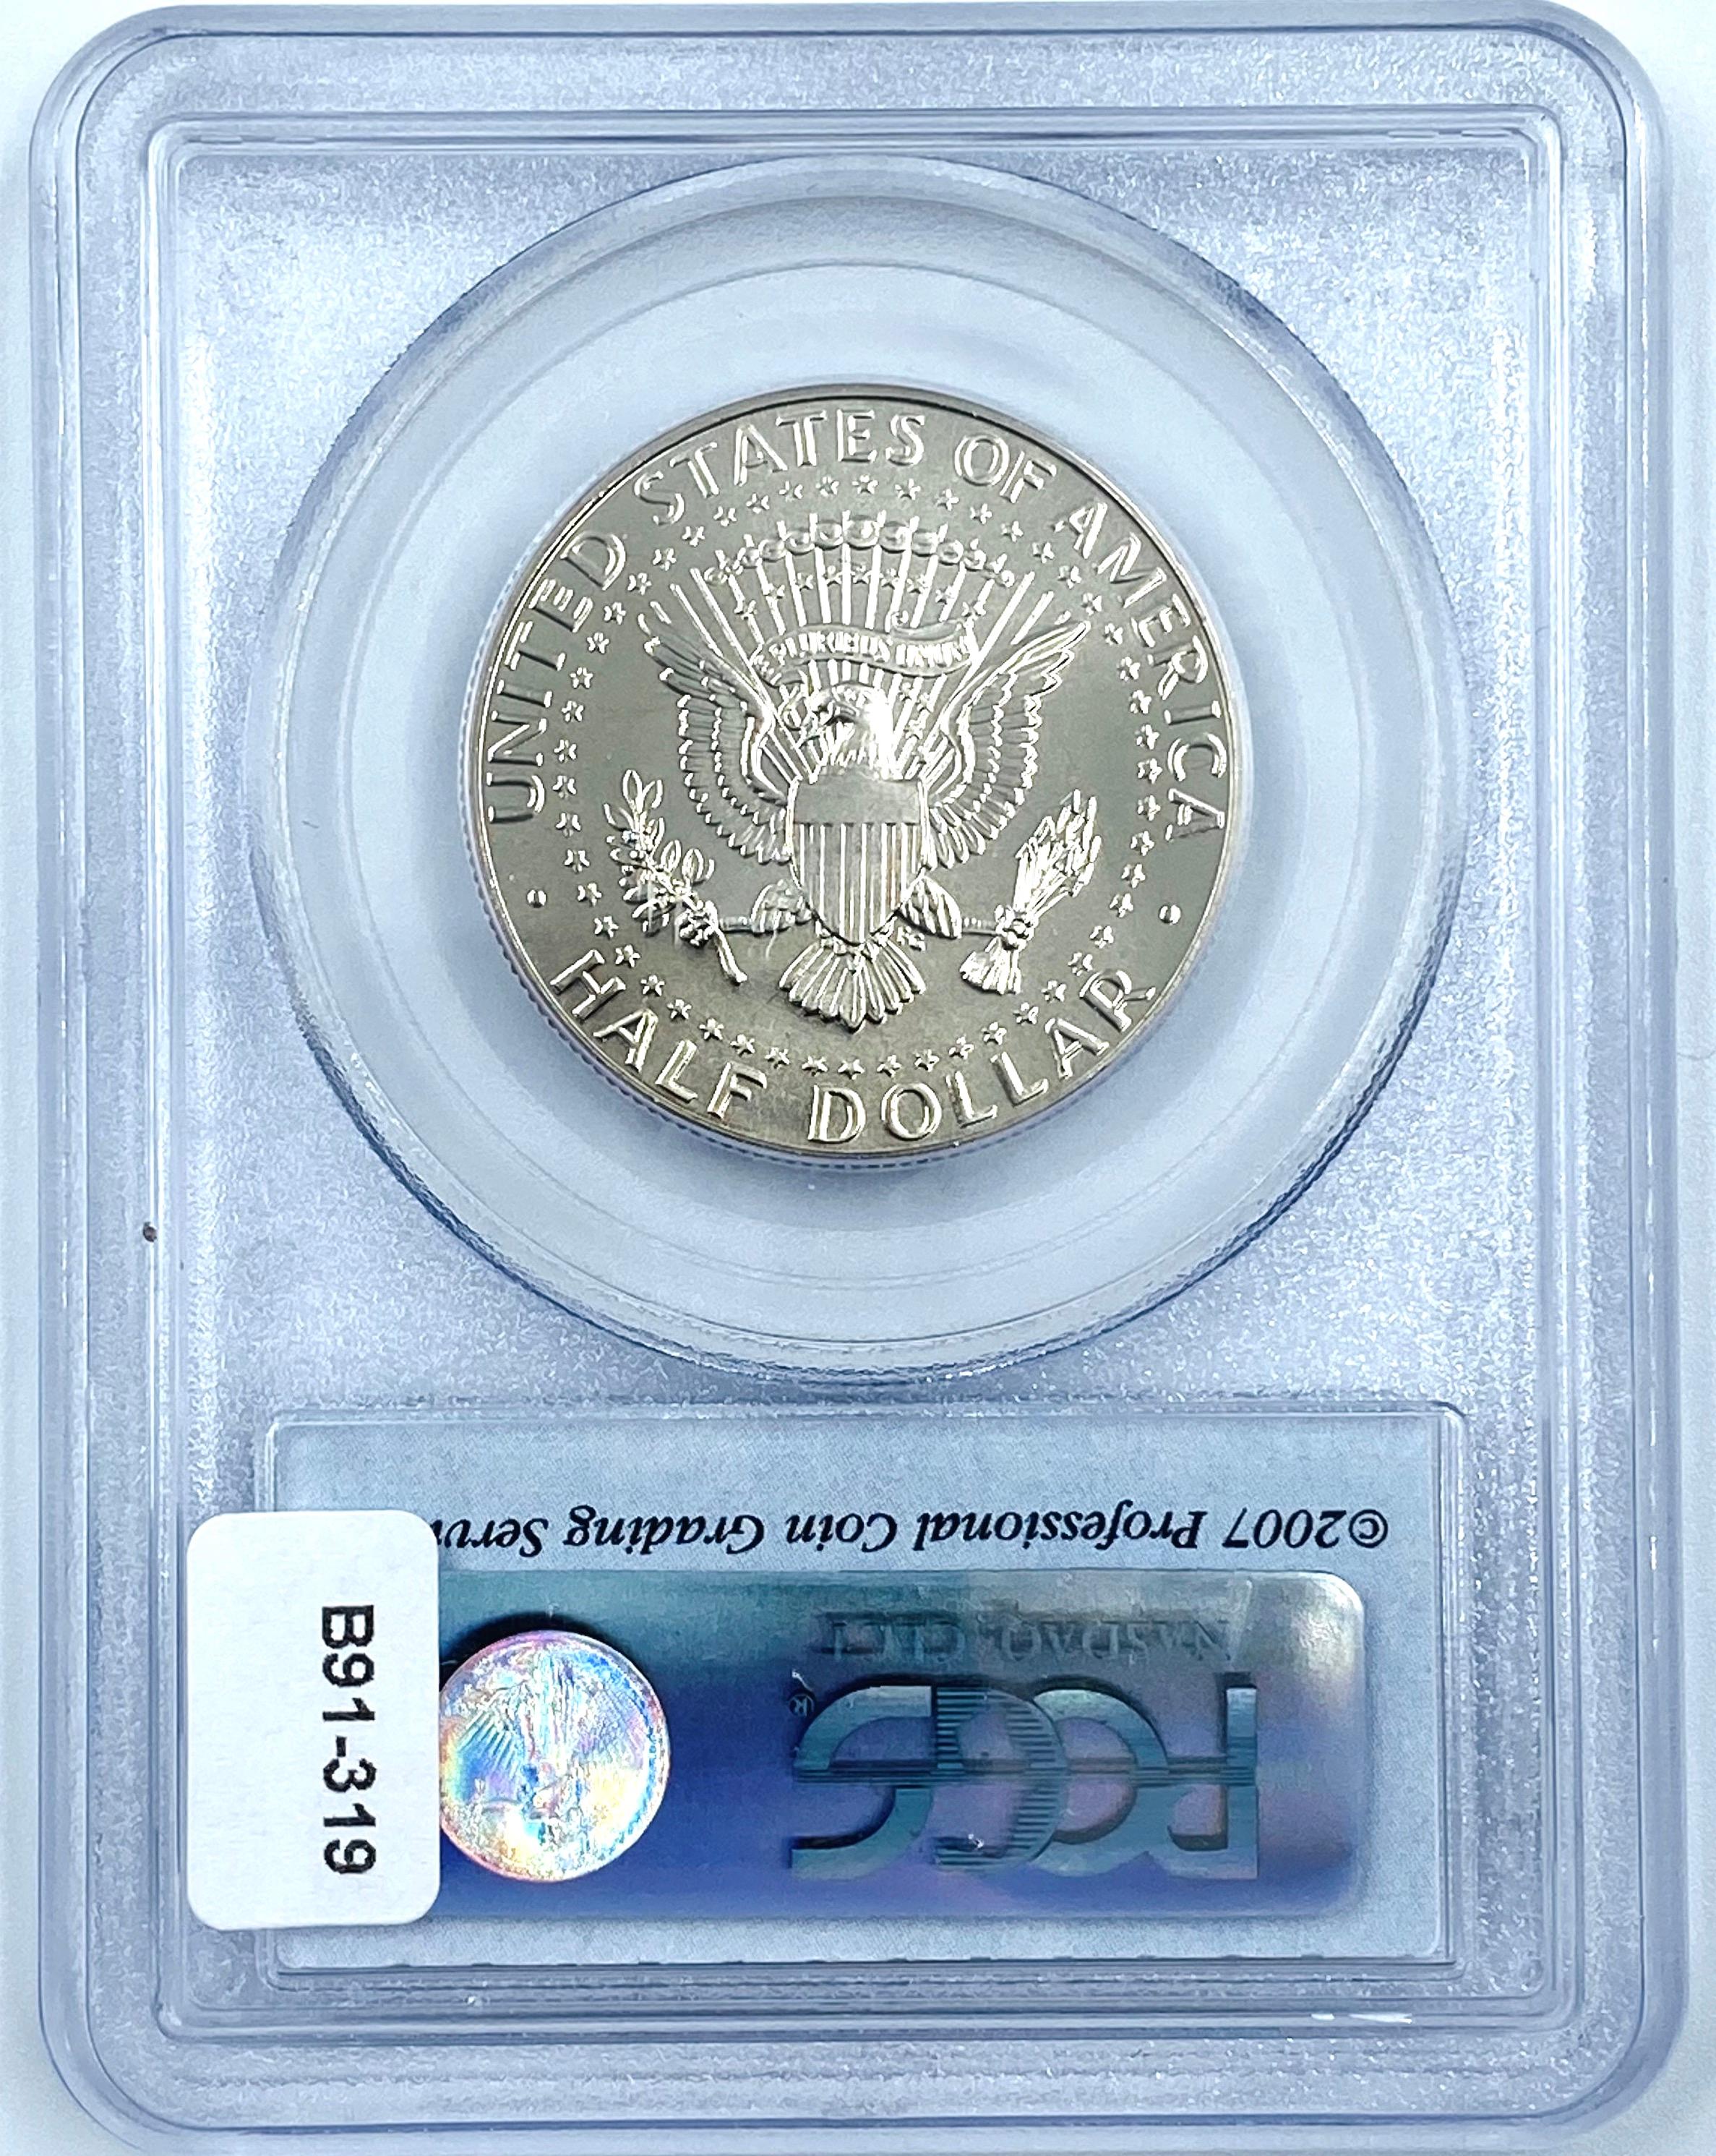 Certified 2007-D satin finish U.S. Kennedy half dollar